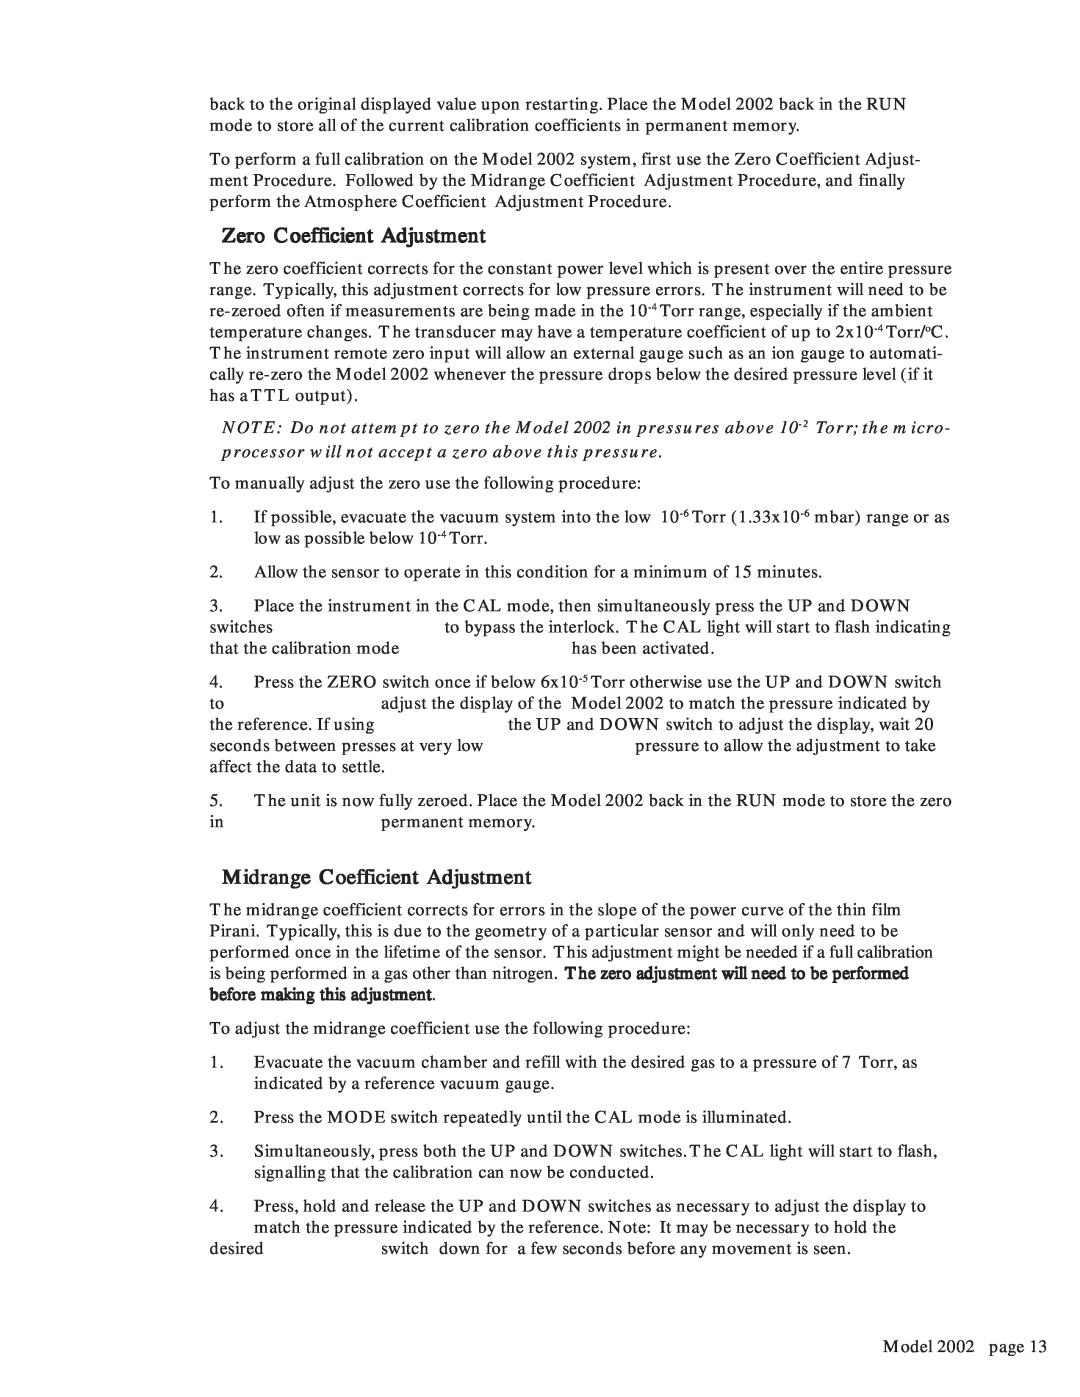 Teledyne 2002 instruction manual Zero Coefficient Adjustment, Midrange Coefficient Adjustment 